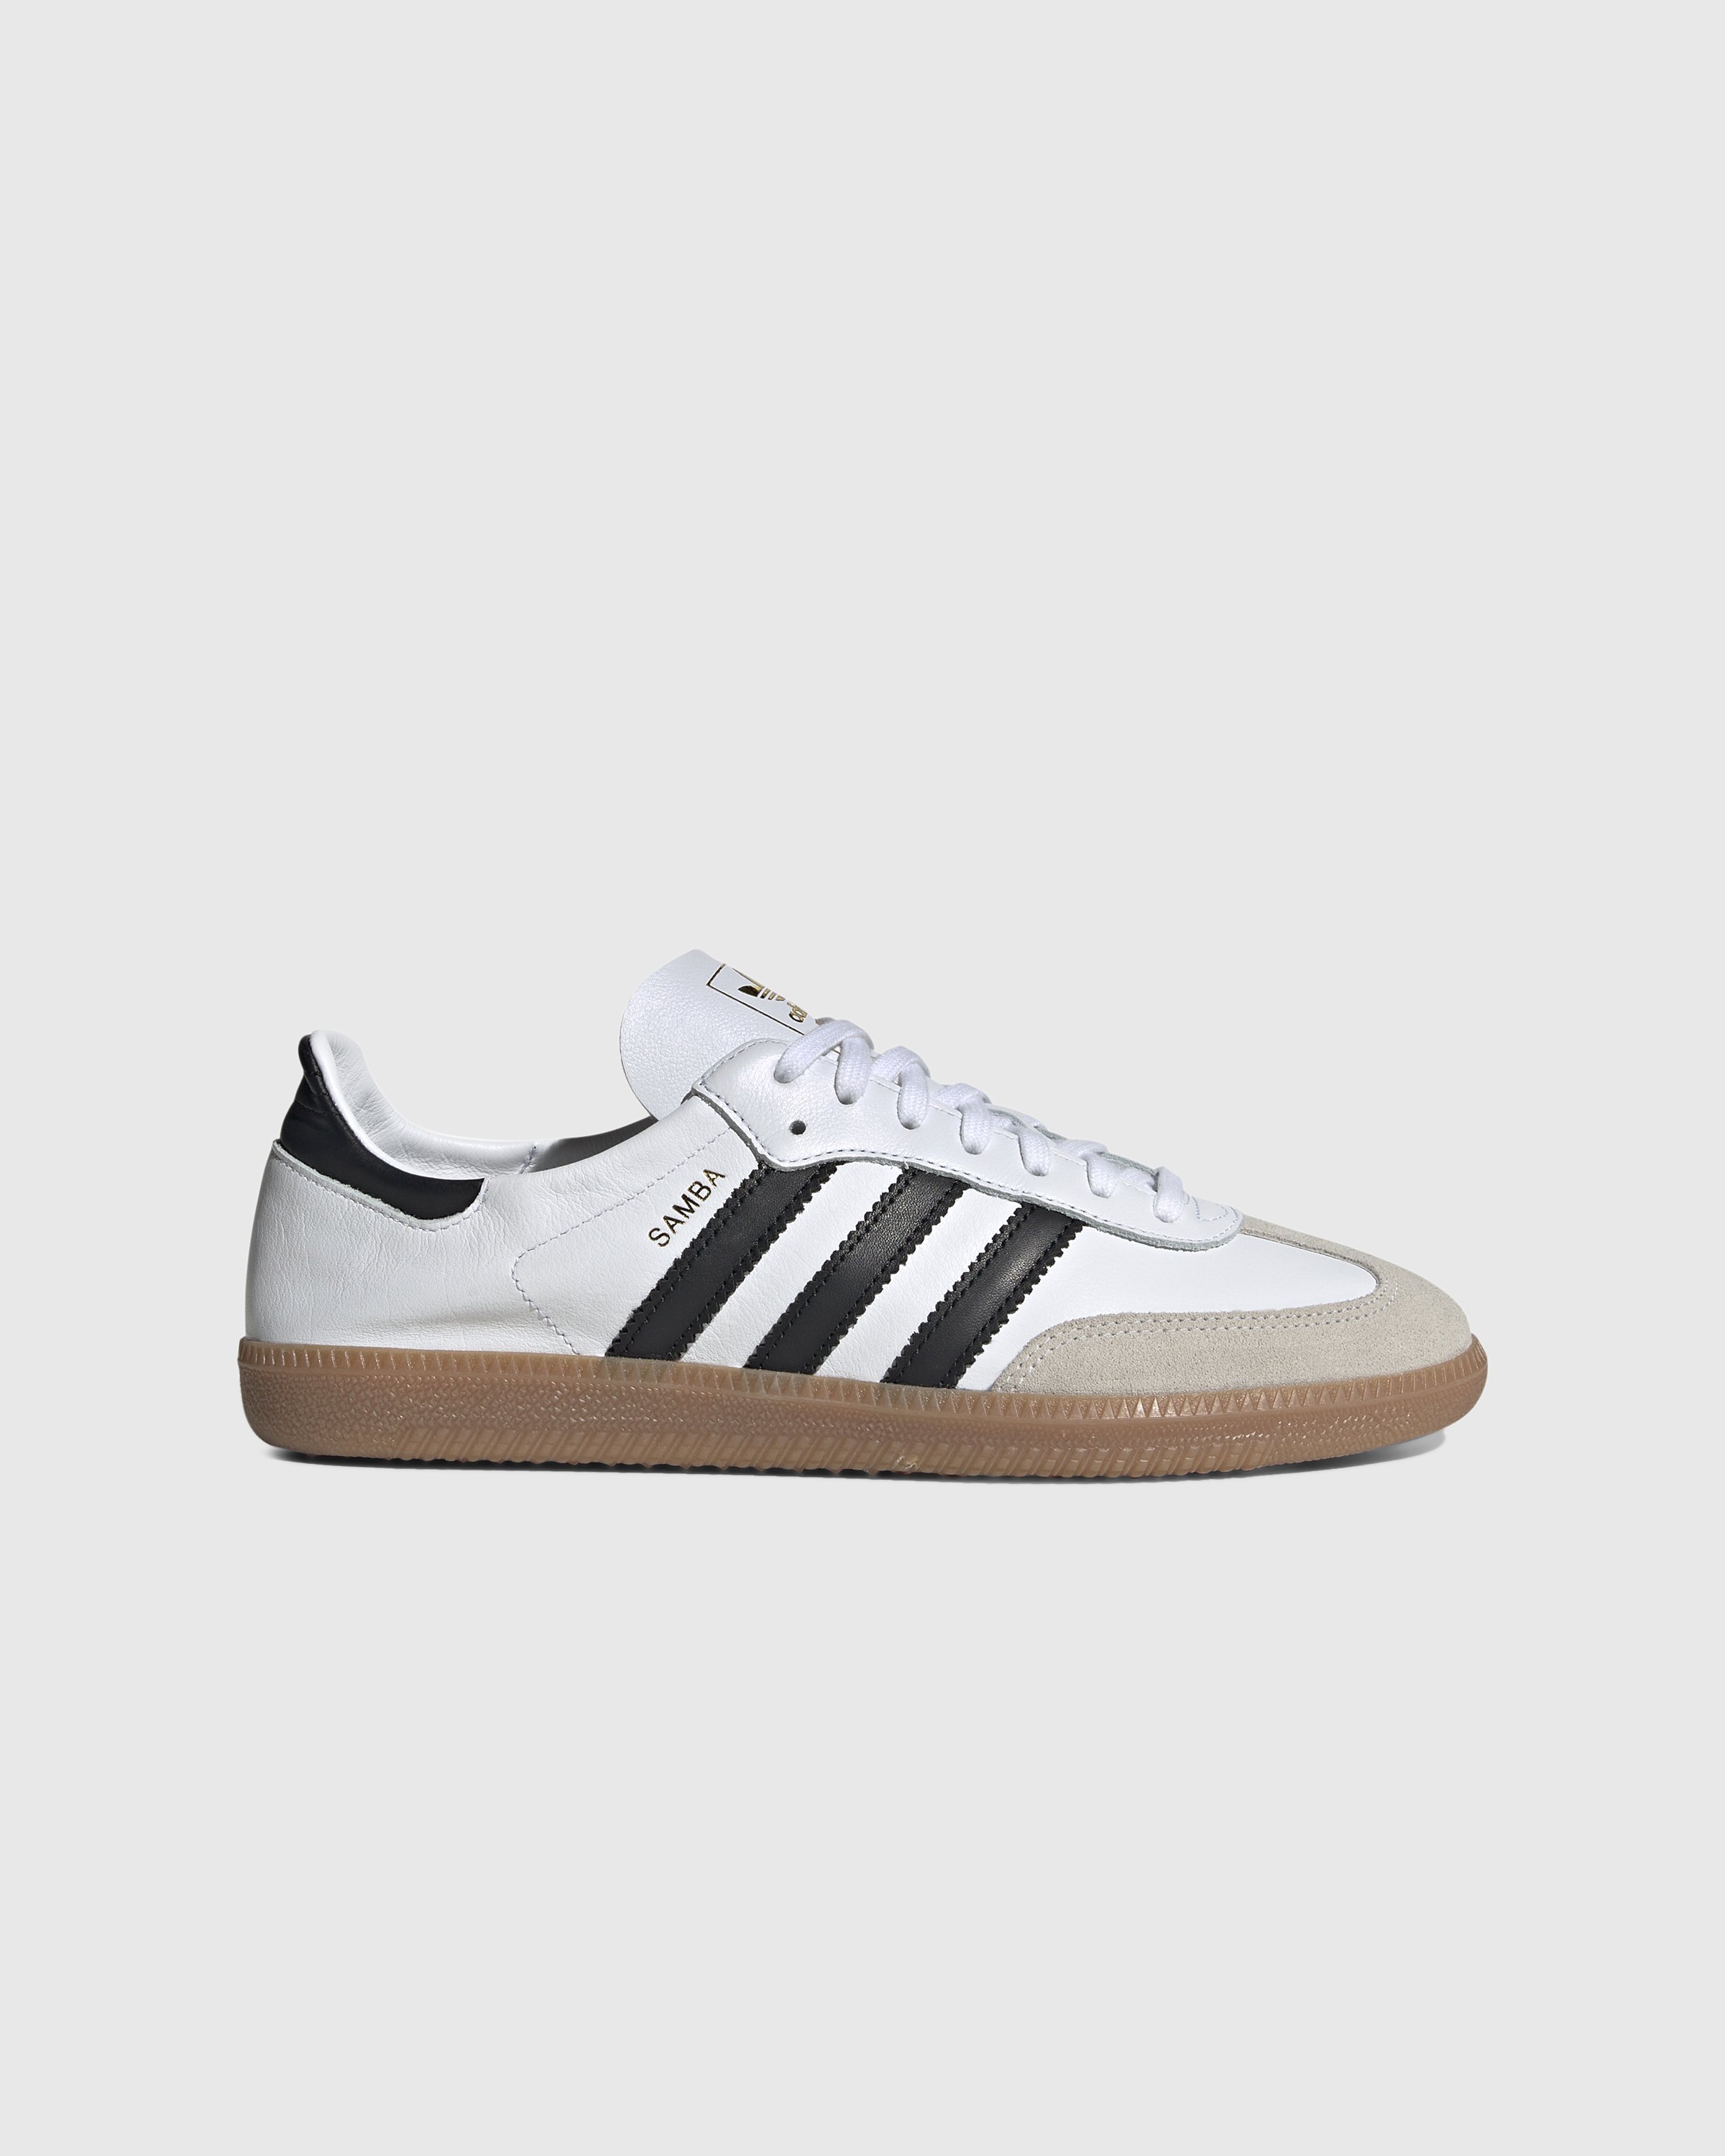 Adidas - Samba Decon White/Black/Greone - Footwear - White - Image 1